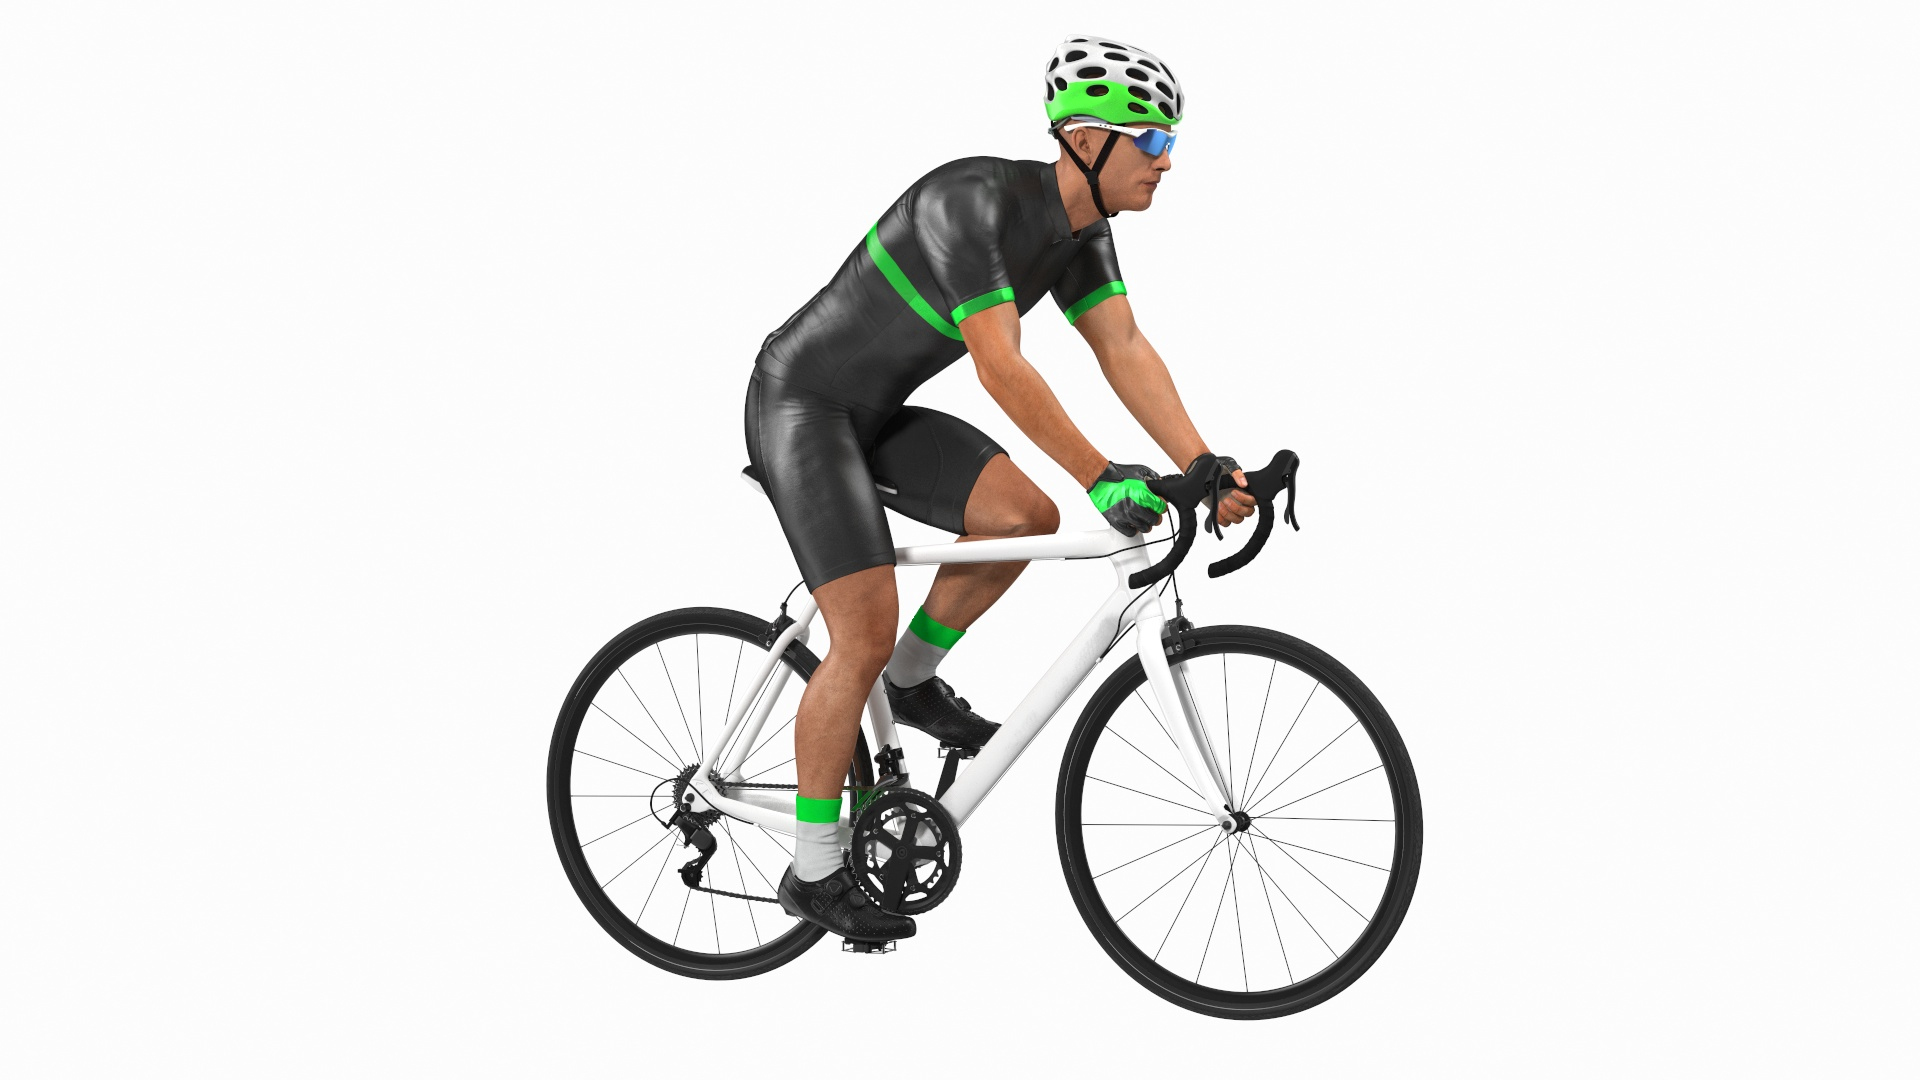 Cyclist riding bike rigged 3D model - TurboSquid 1597175